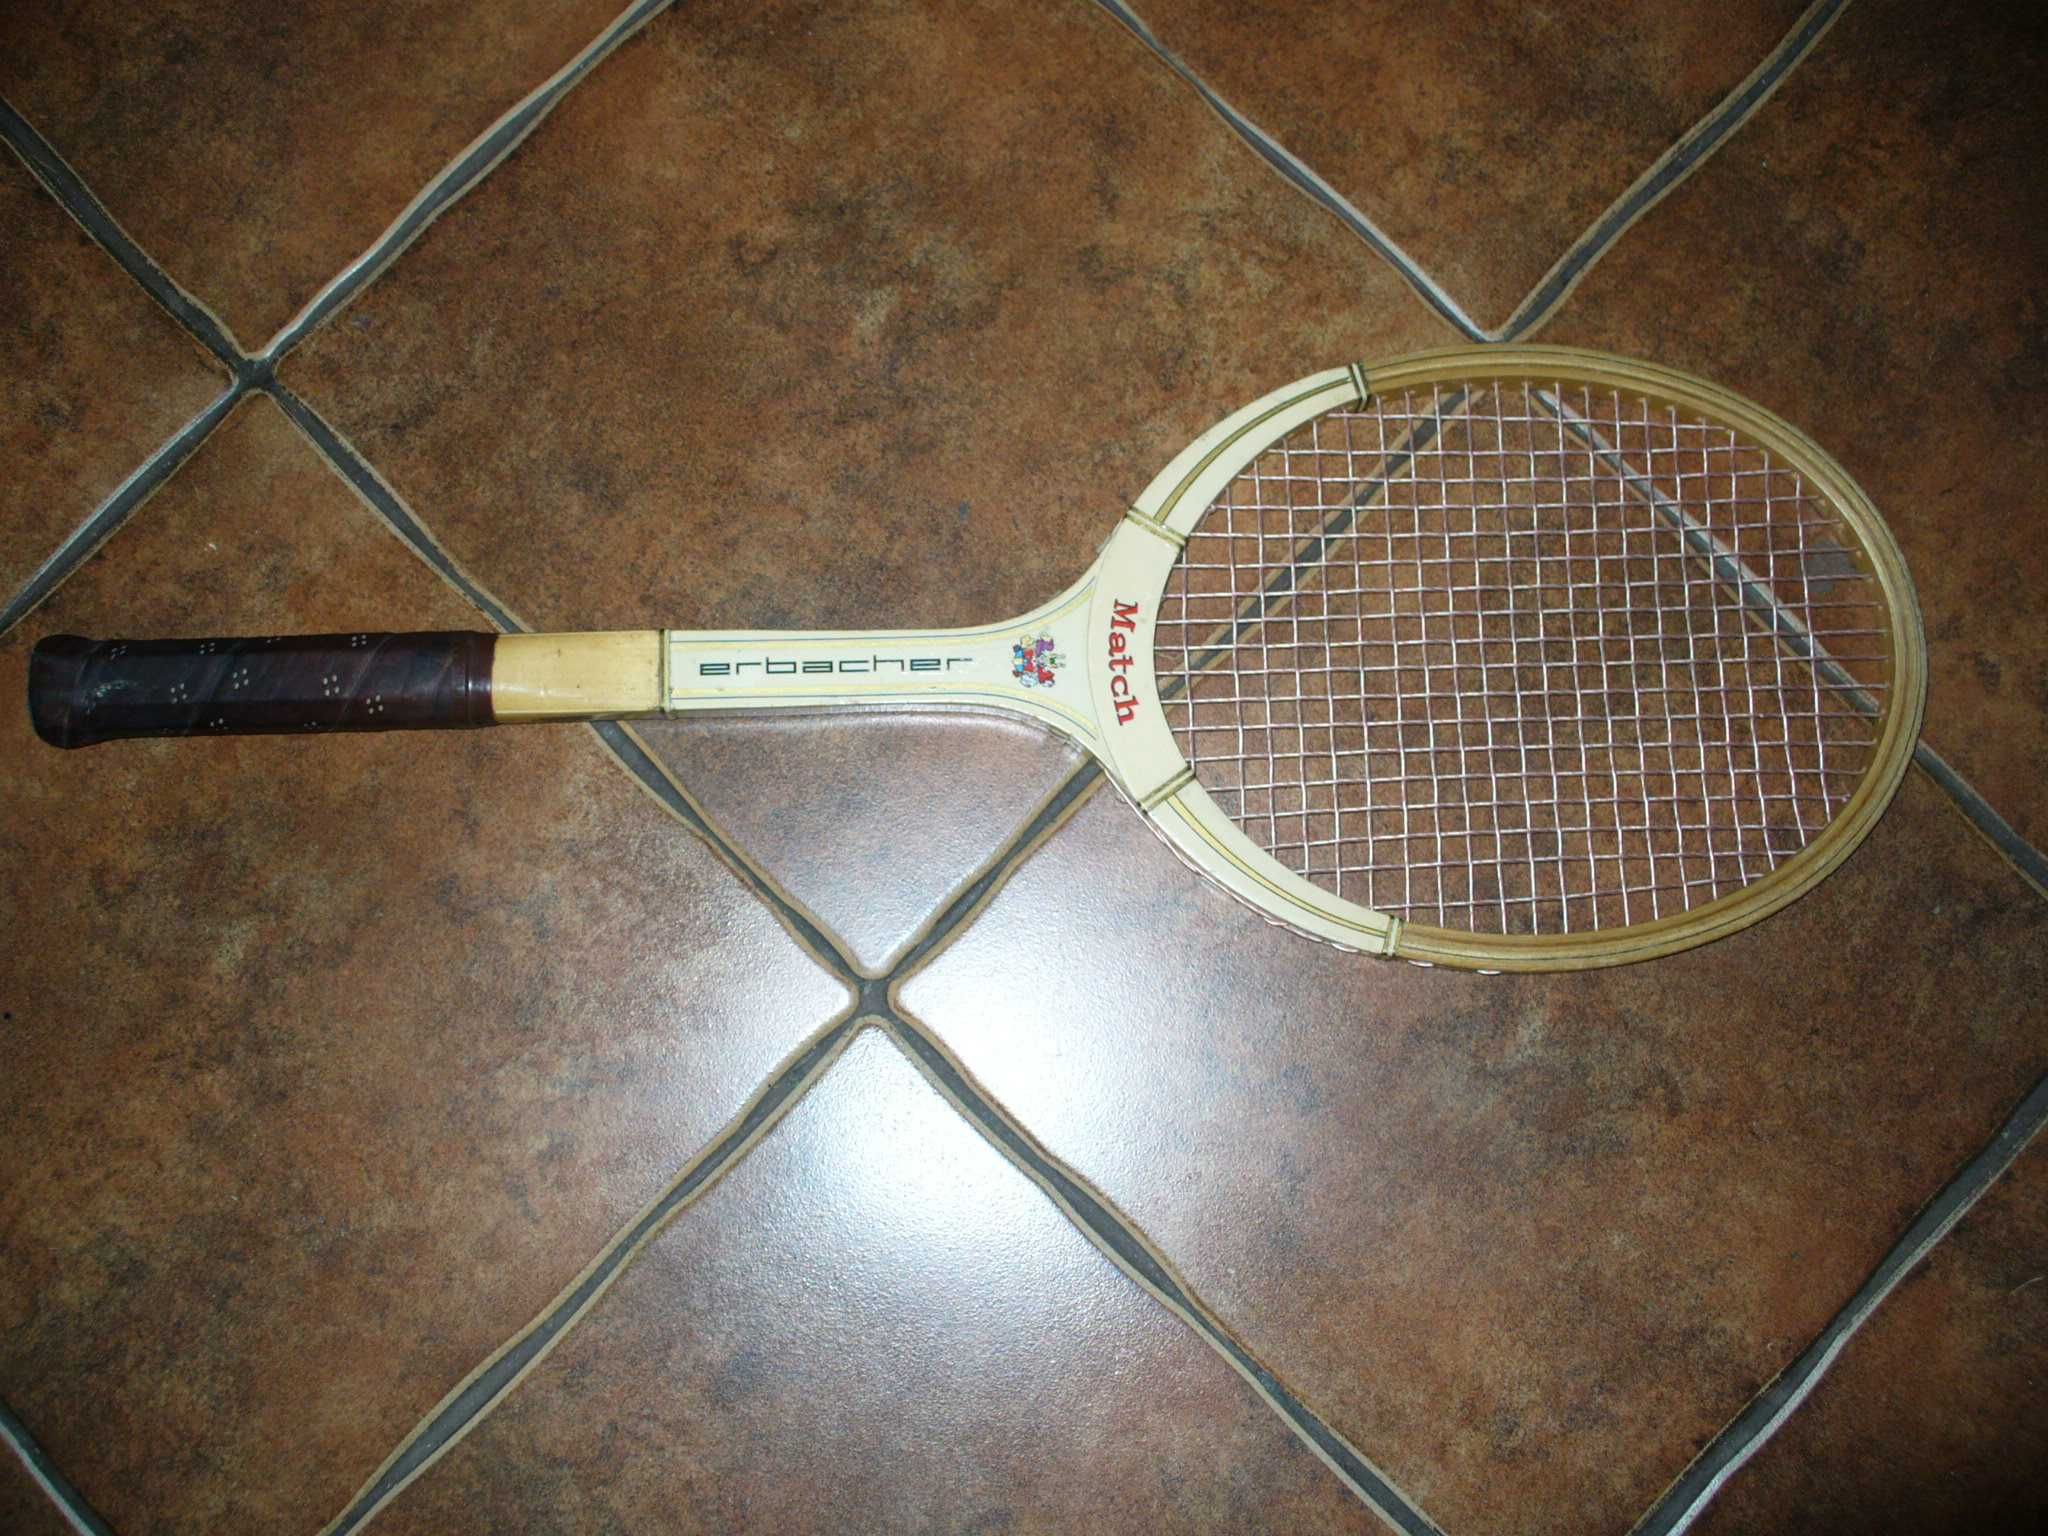 Rakieta tenisowa Erbacher Match,drewniana,kolekcjonerska